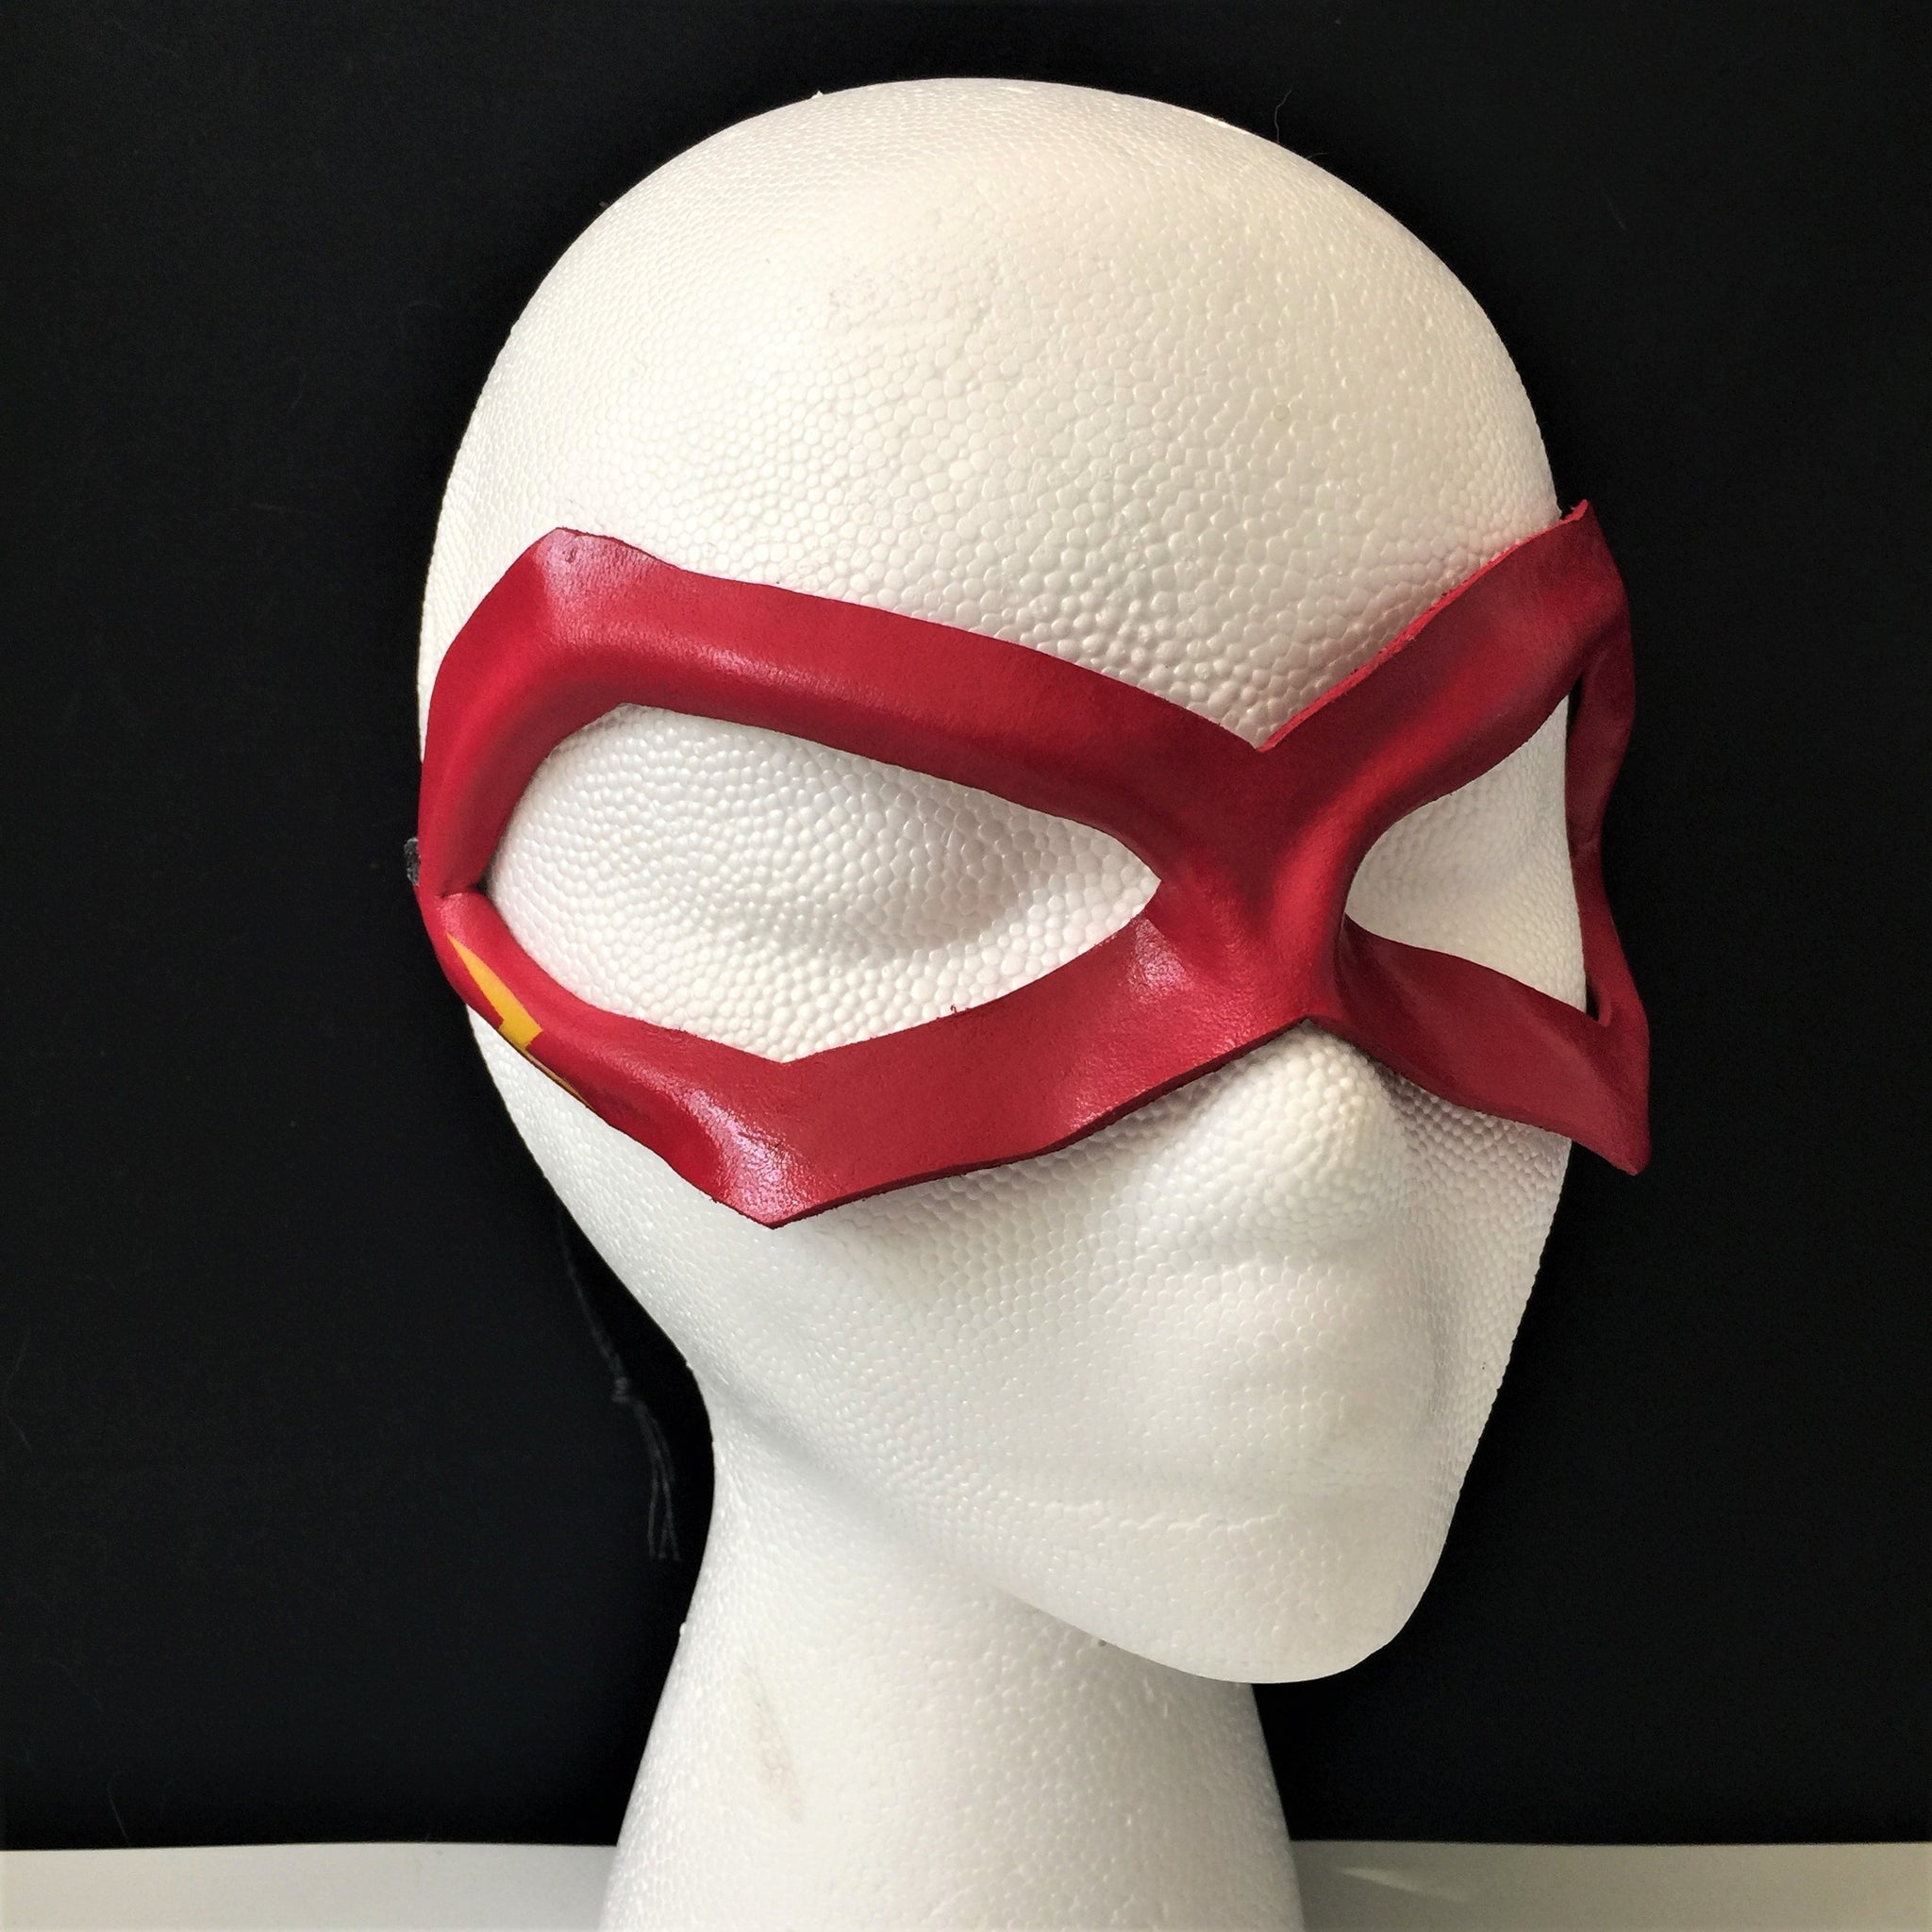 Superhero Eye Mask Glasses